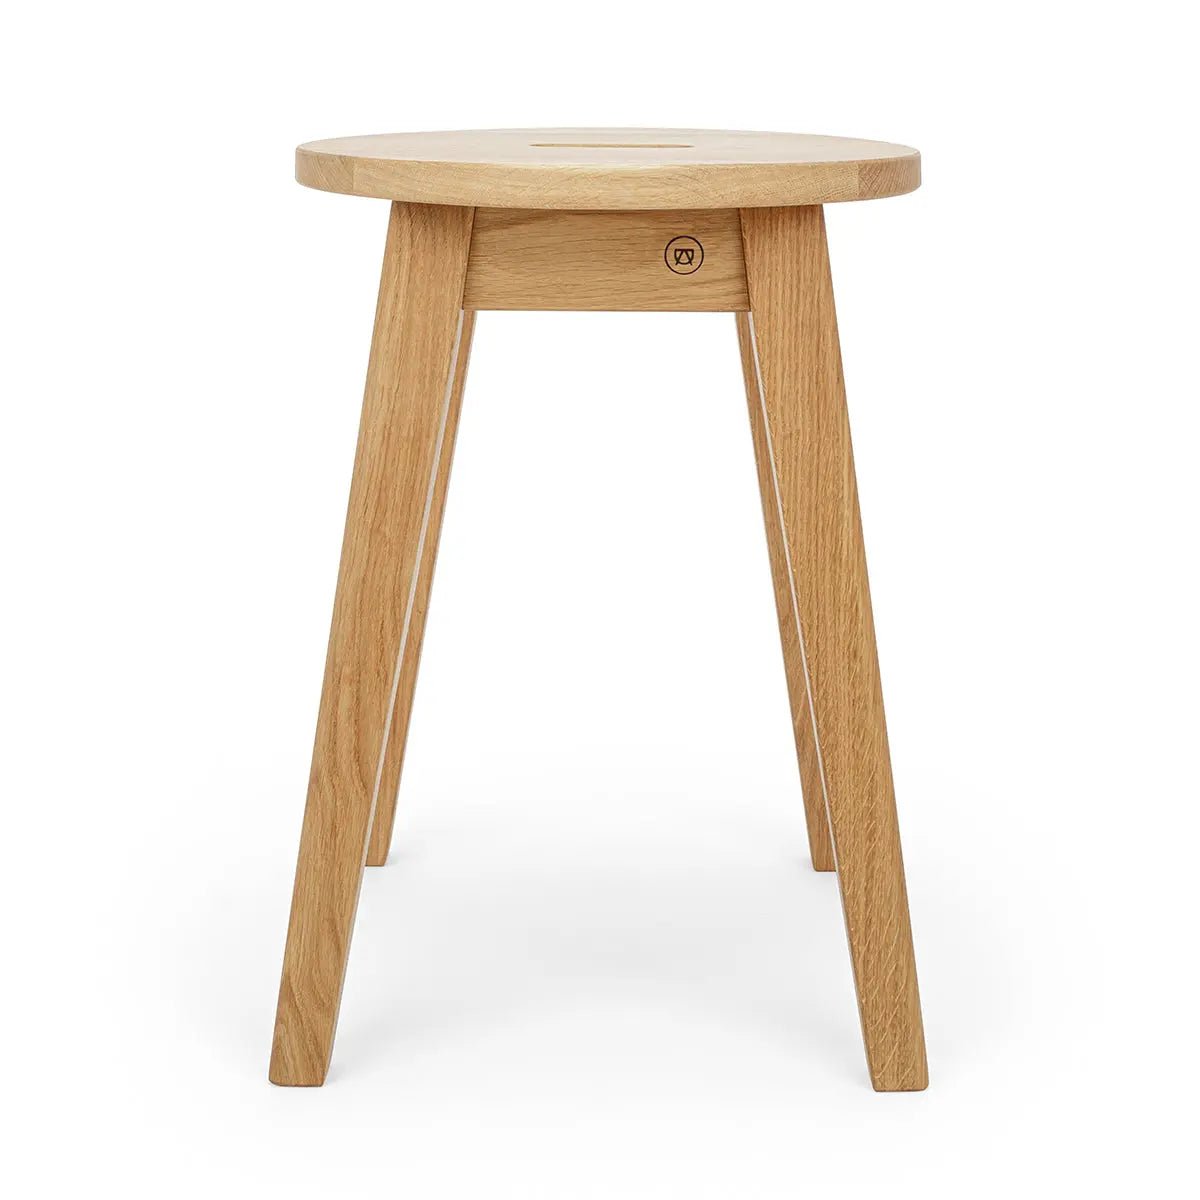 »Josef« stool made of oak wood for a stylish eternity